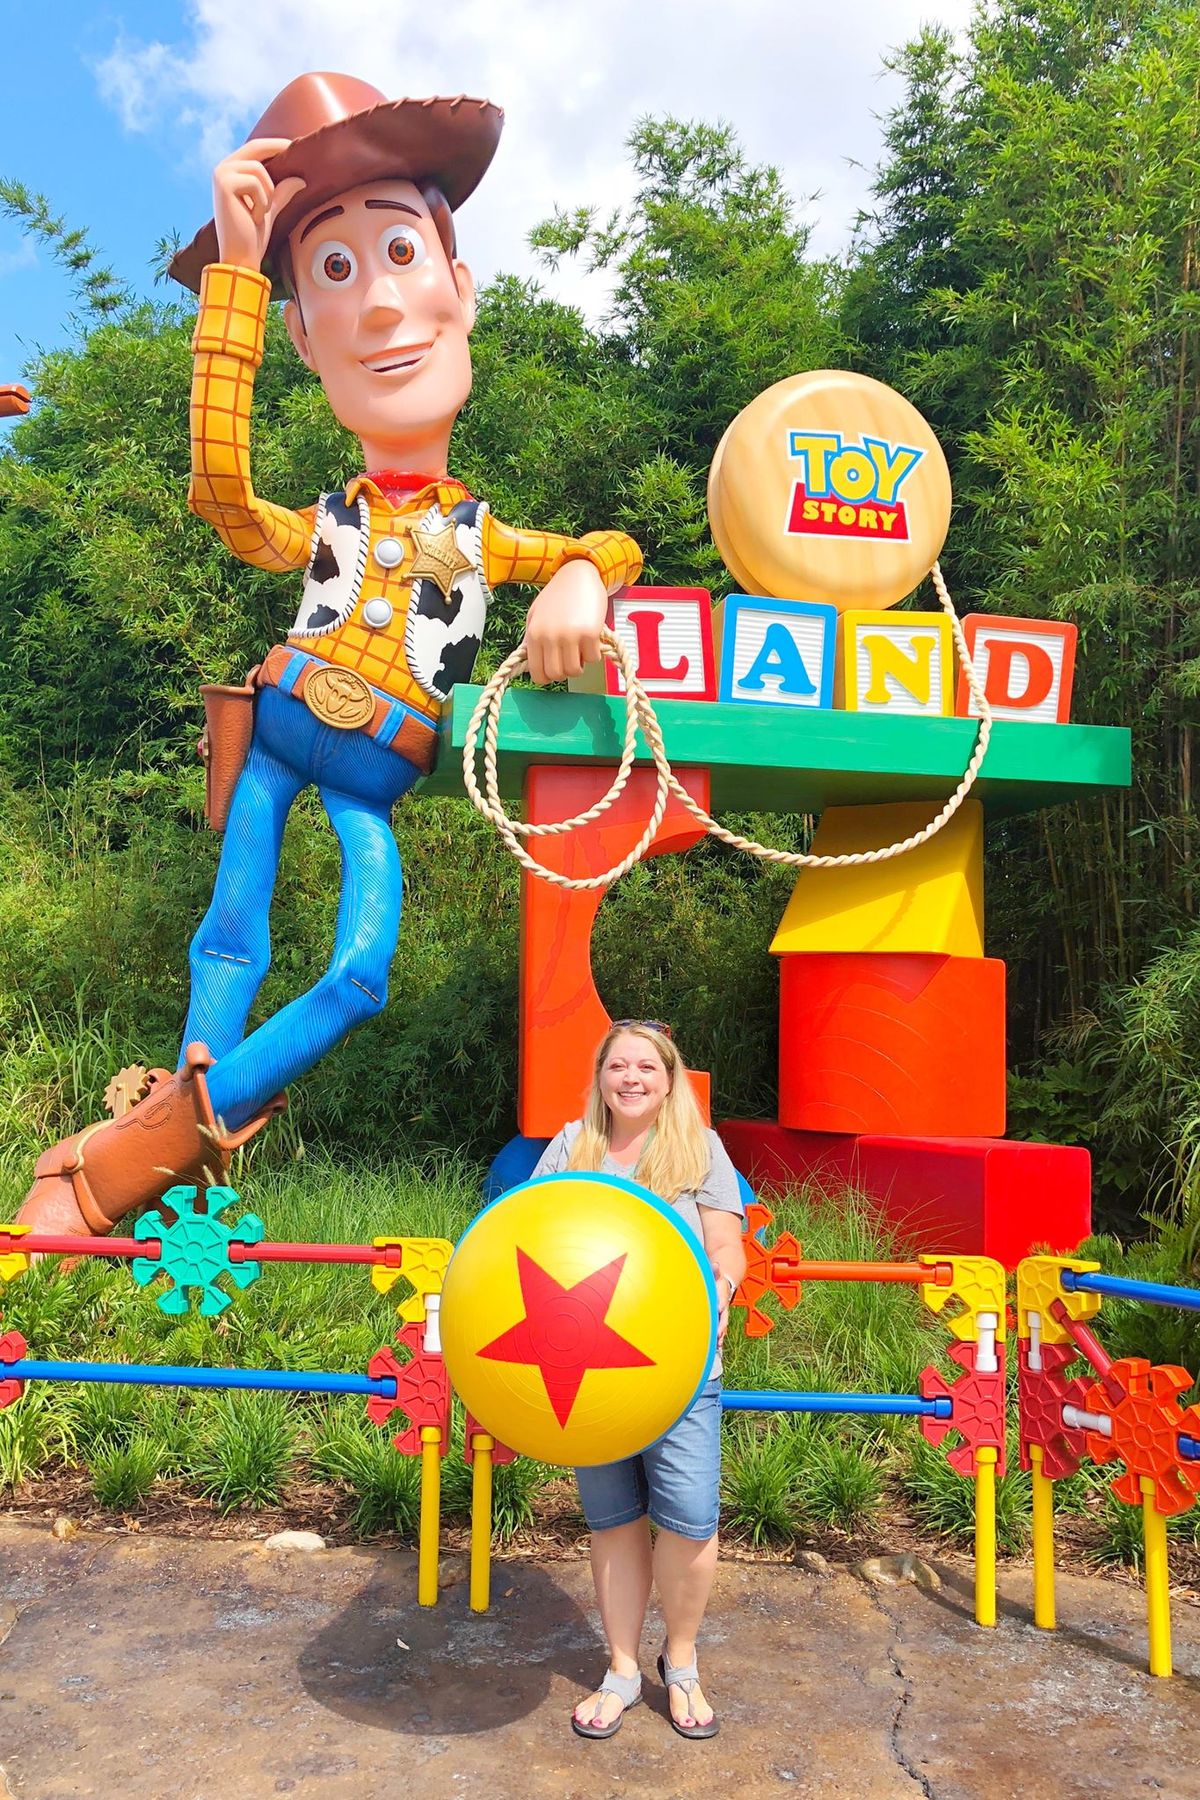 Luxo palli viskamine enne Toy Story Landi avamiskuupäeva